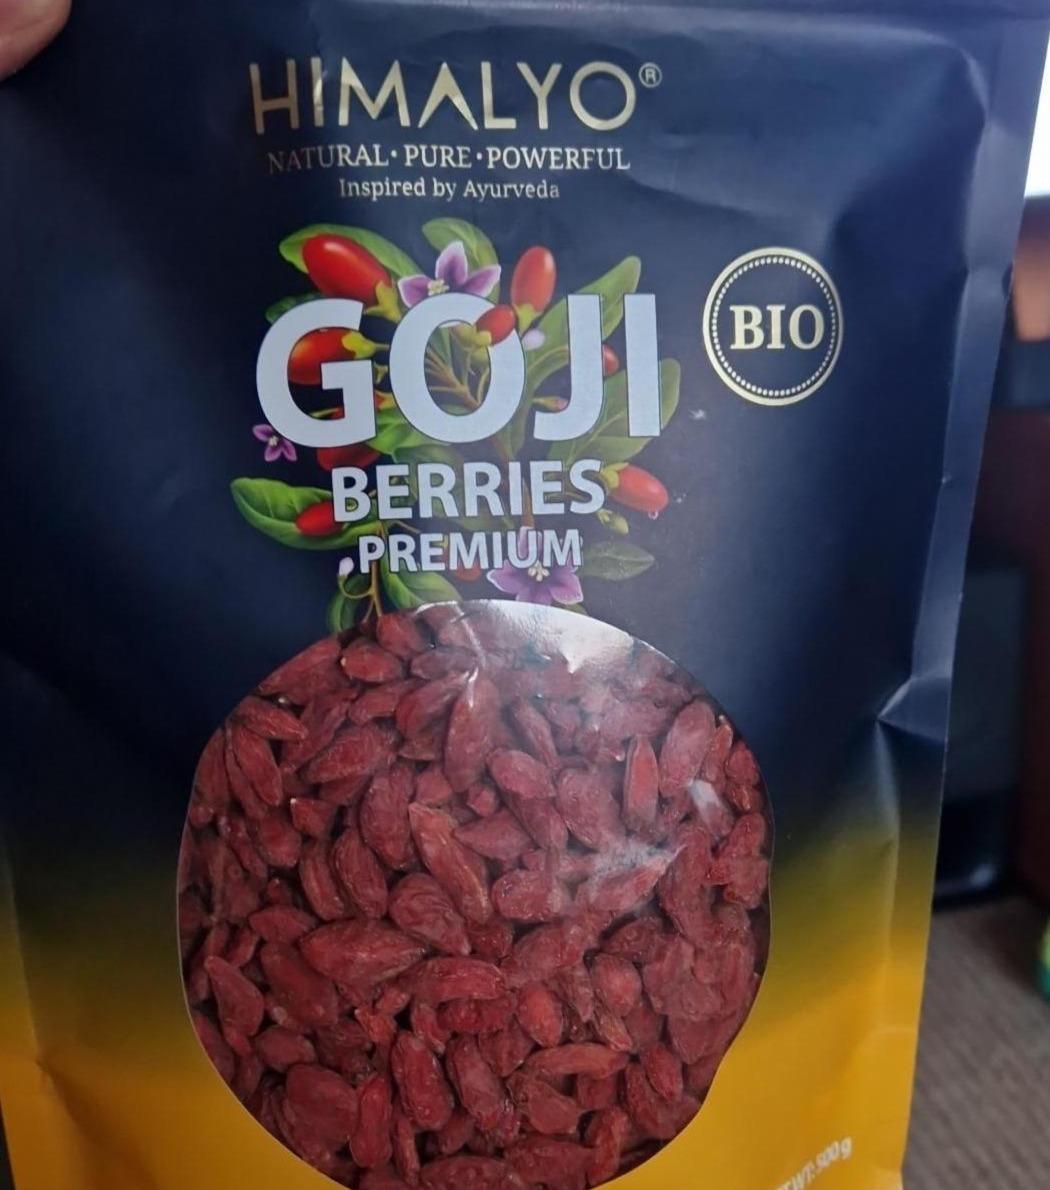 Fotografie - Bio GOJI Berries Premium Himalyo